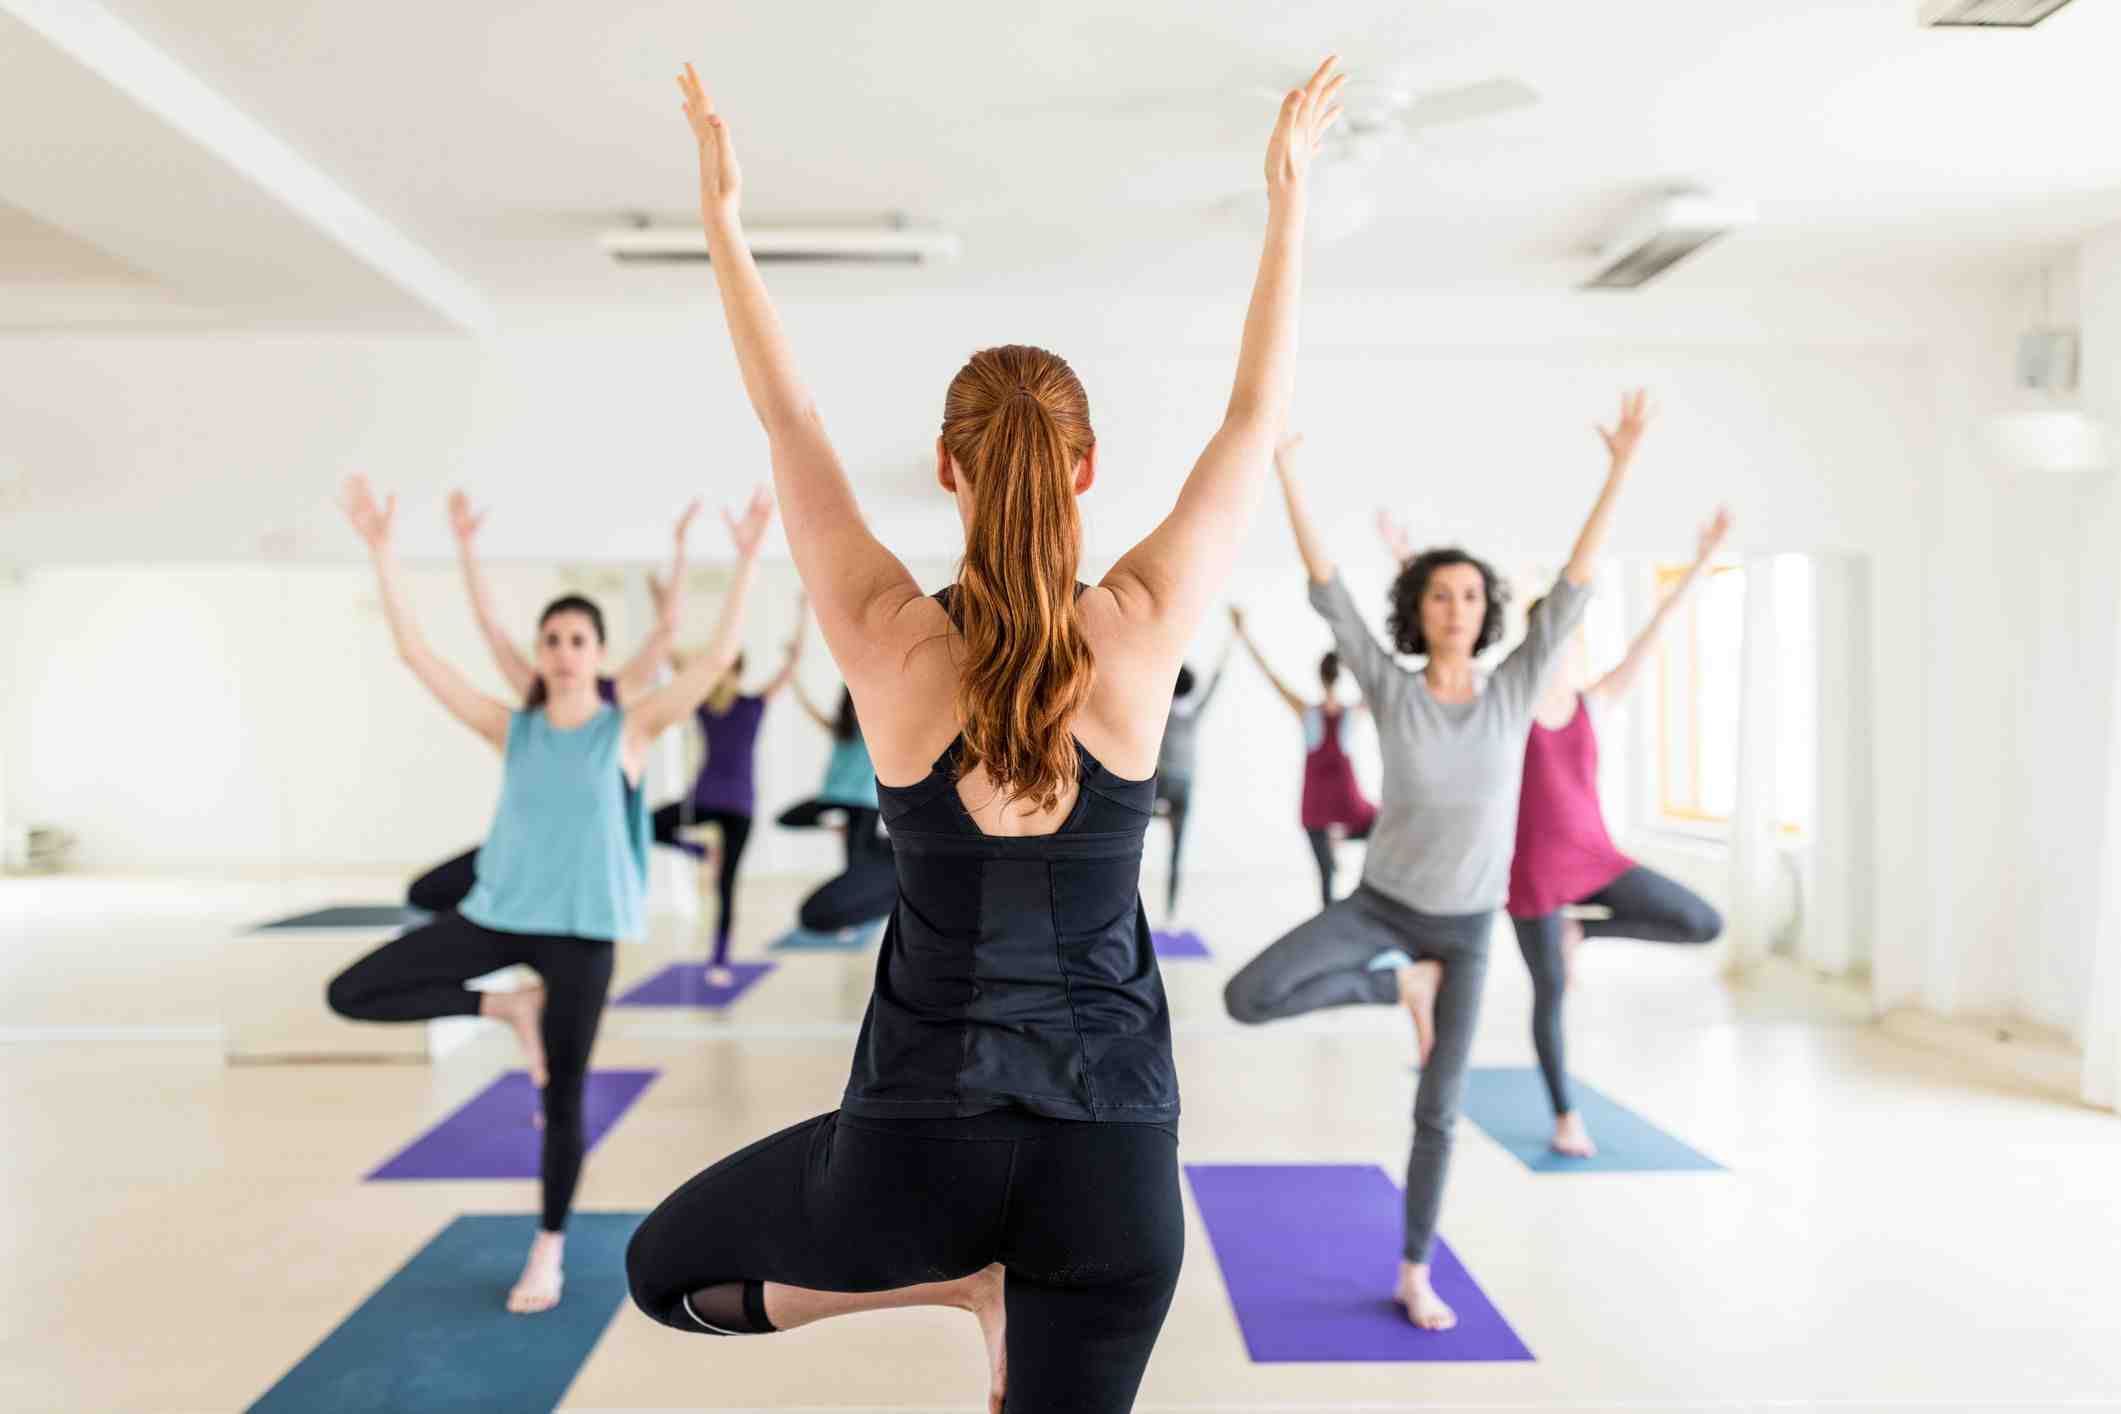 Is Vinyasa yoga hard for beginners?